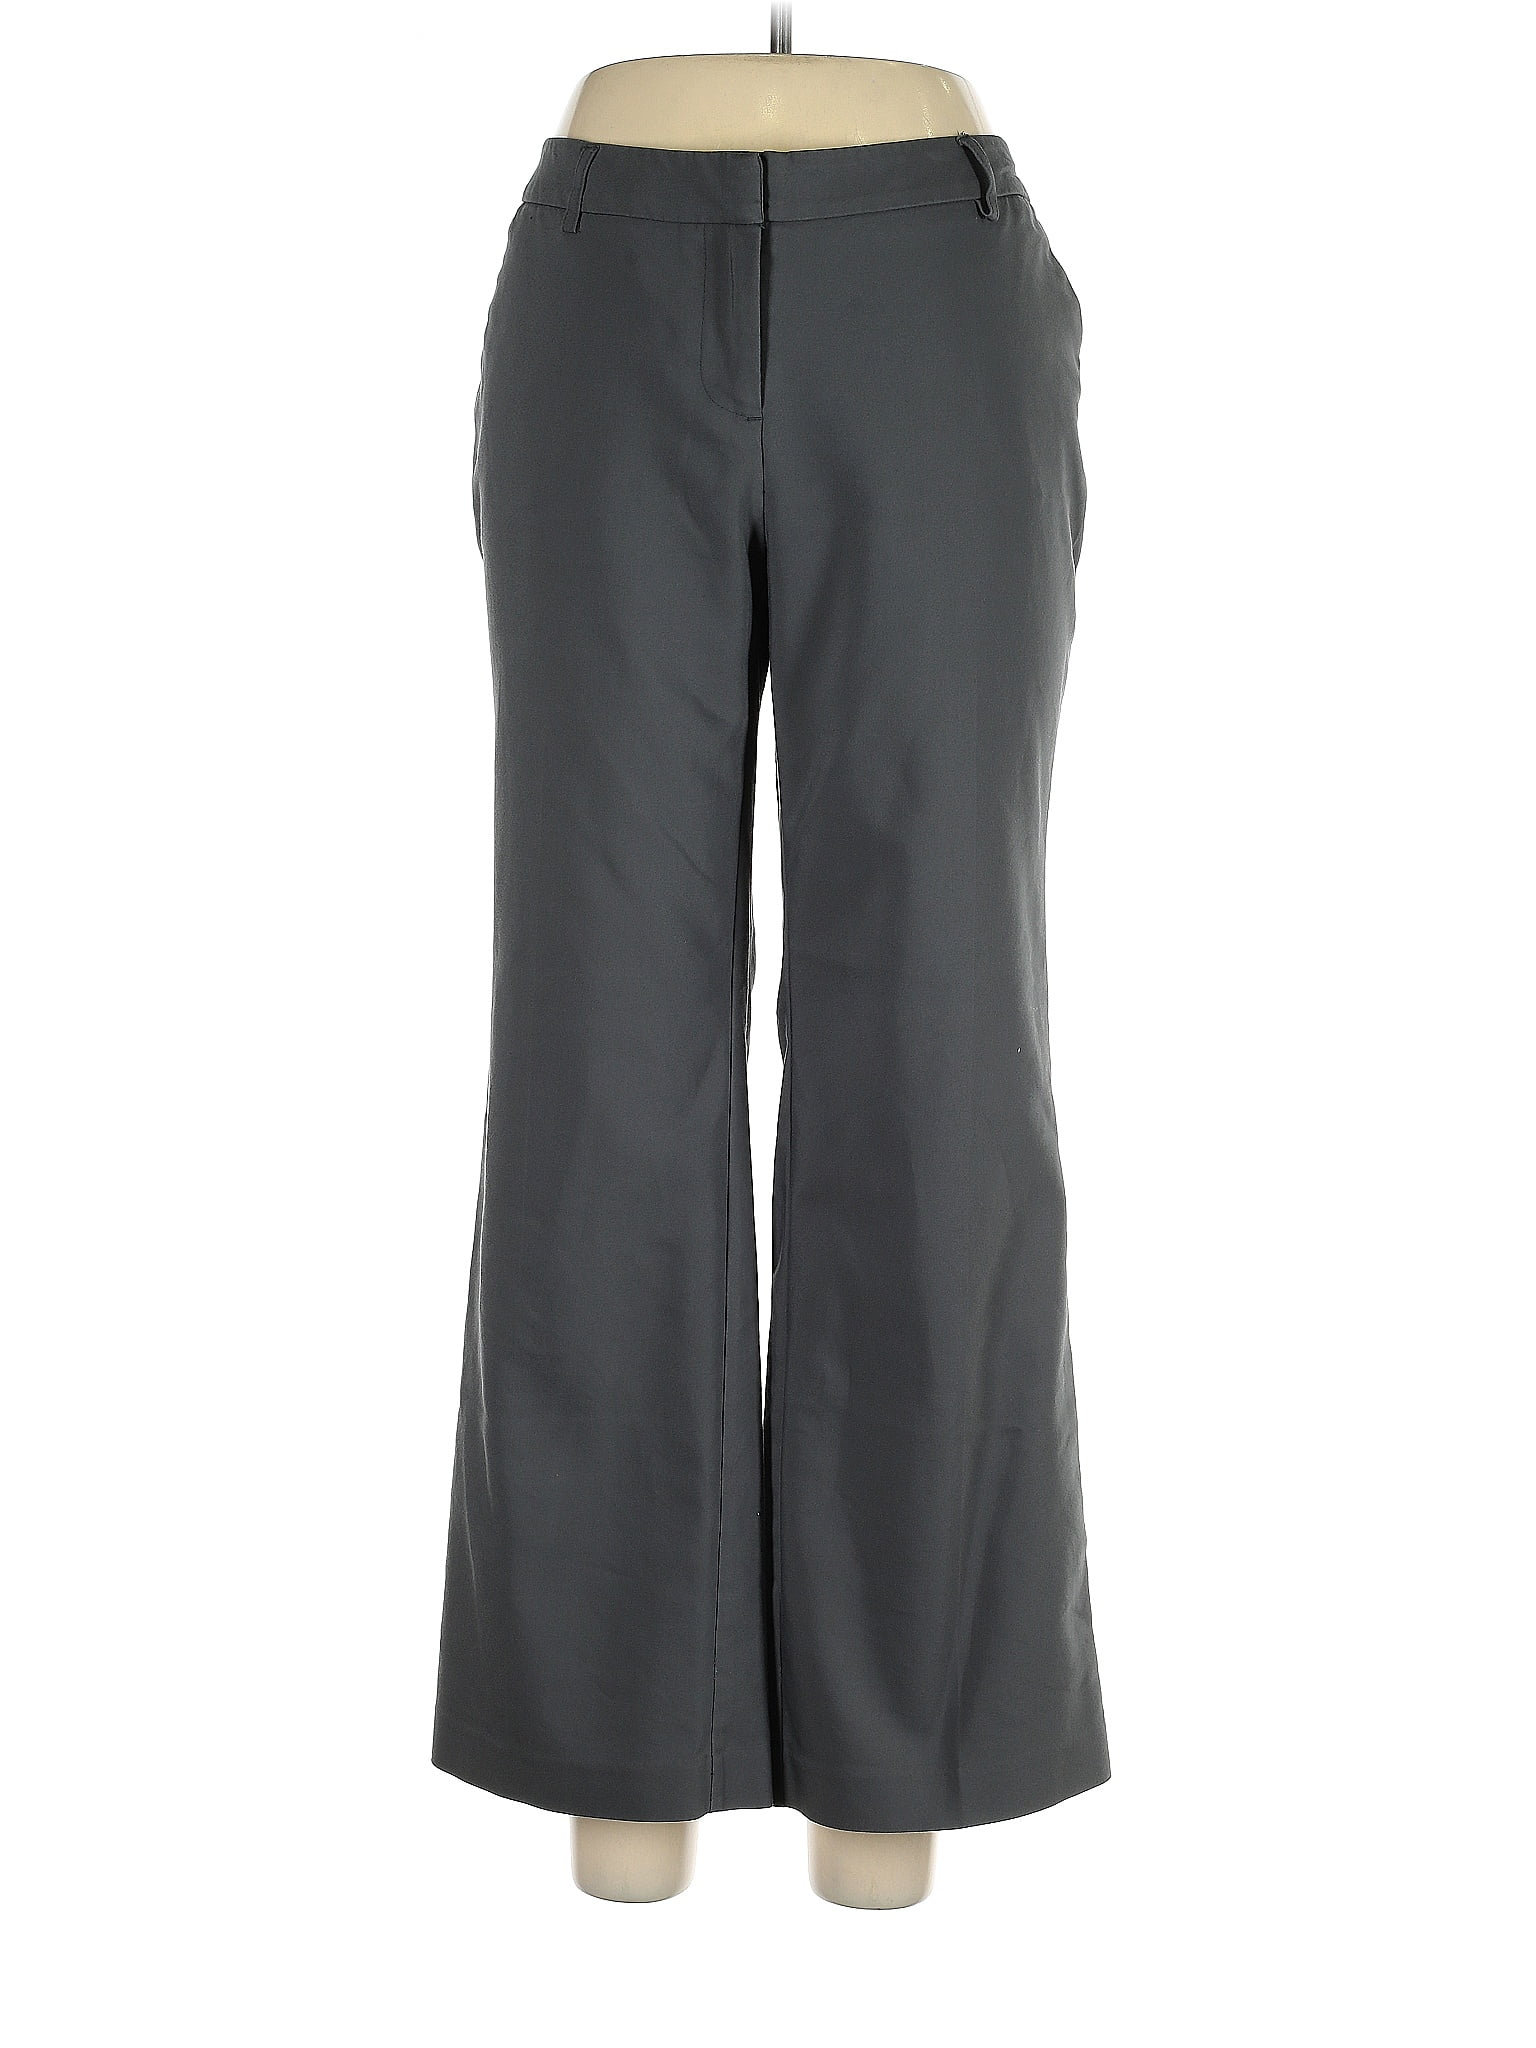 Simply Vera Vera Wang Solid Gray Black Leggings Size XL (Petite) - 46% off